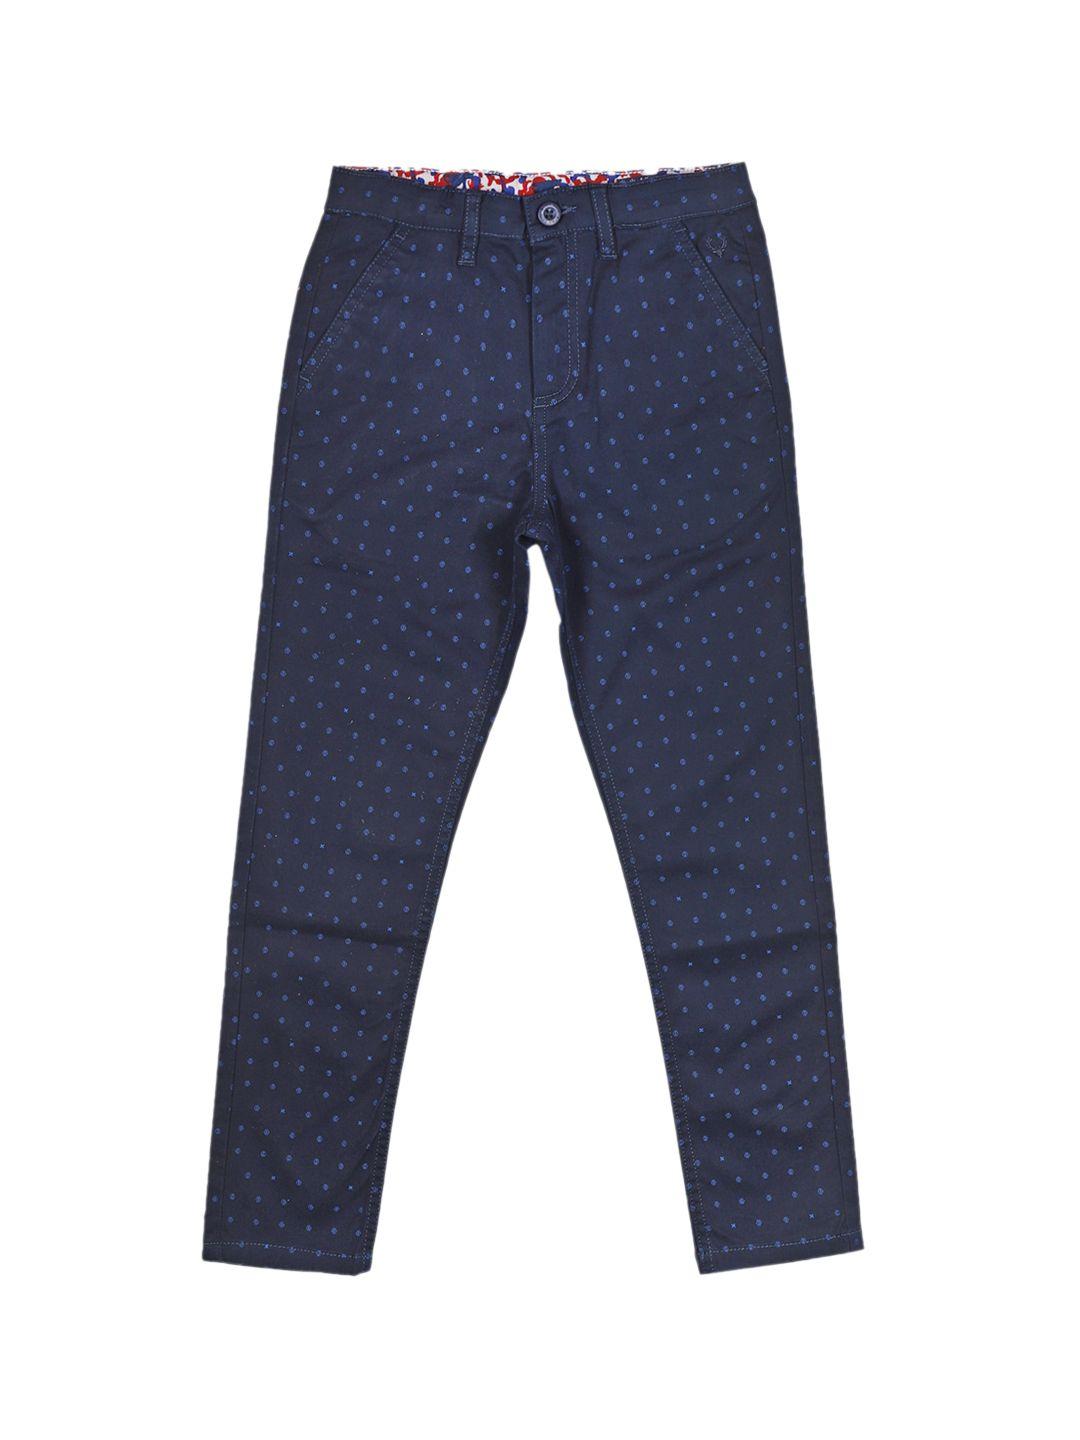 allen solly junior boys navy blue printed slim fit trousers